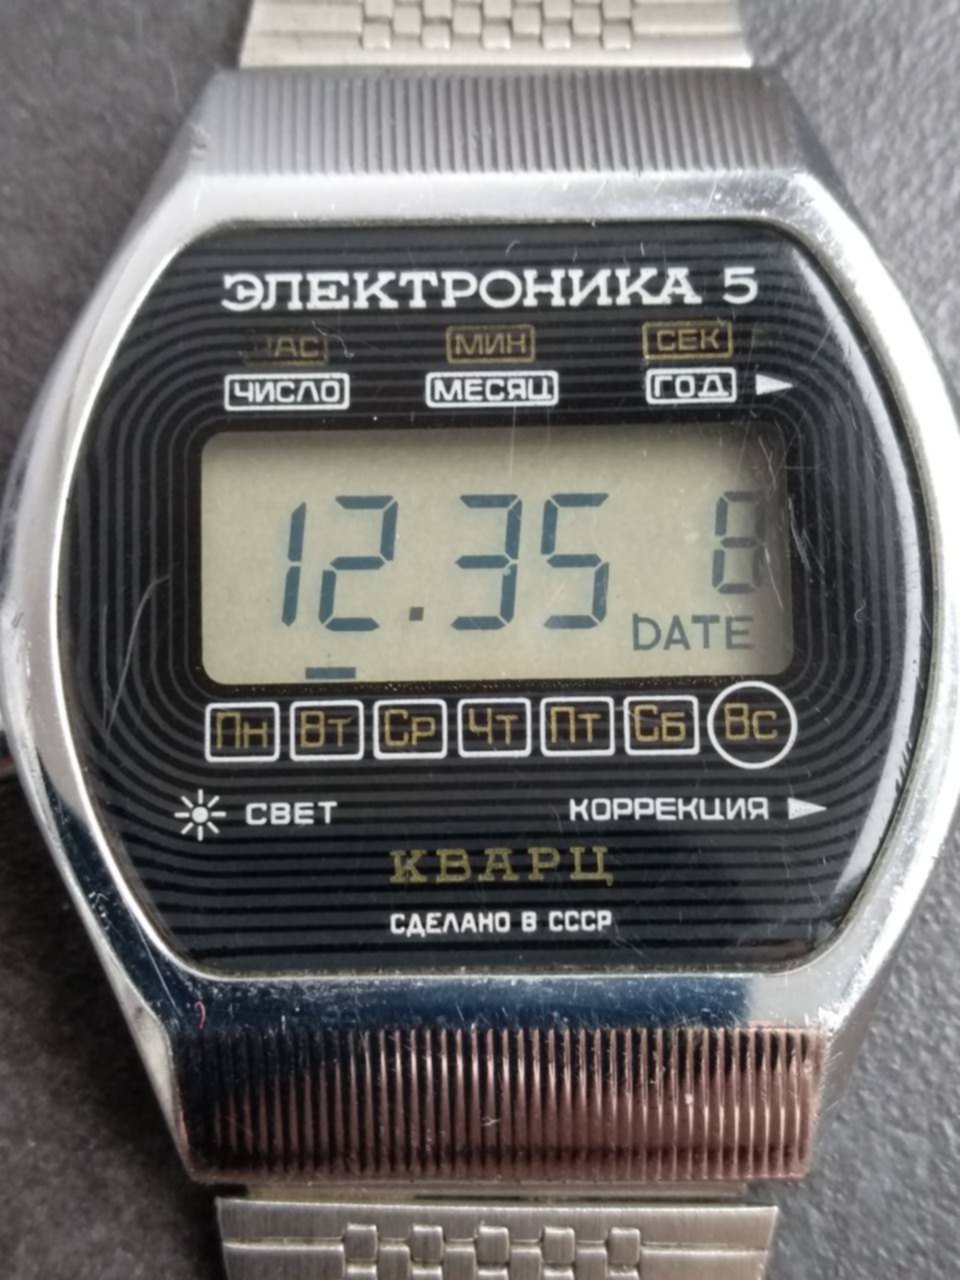 Советские часы электроника